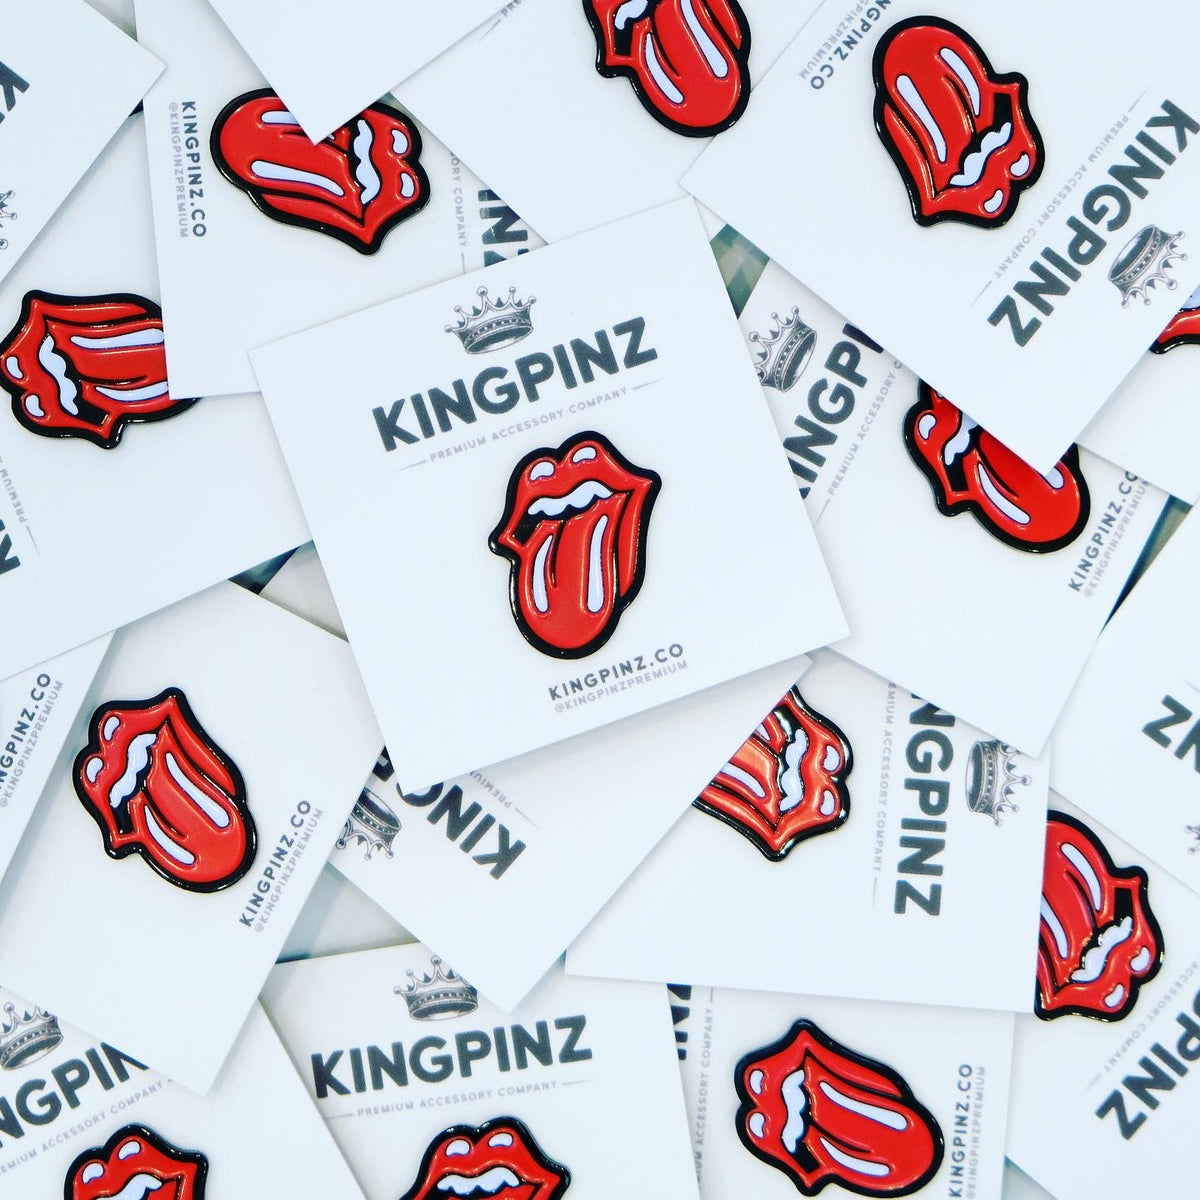 Kingpinz Clicquot Lapel Pin